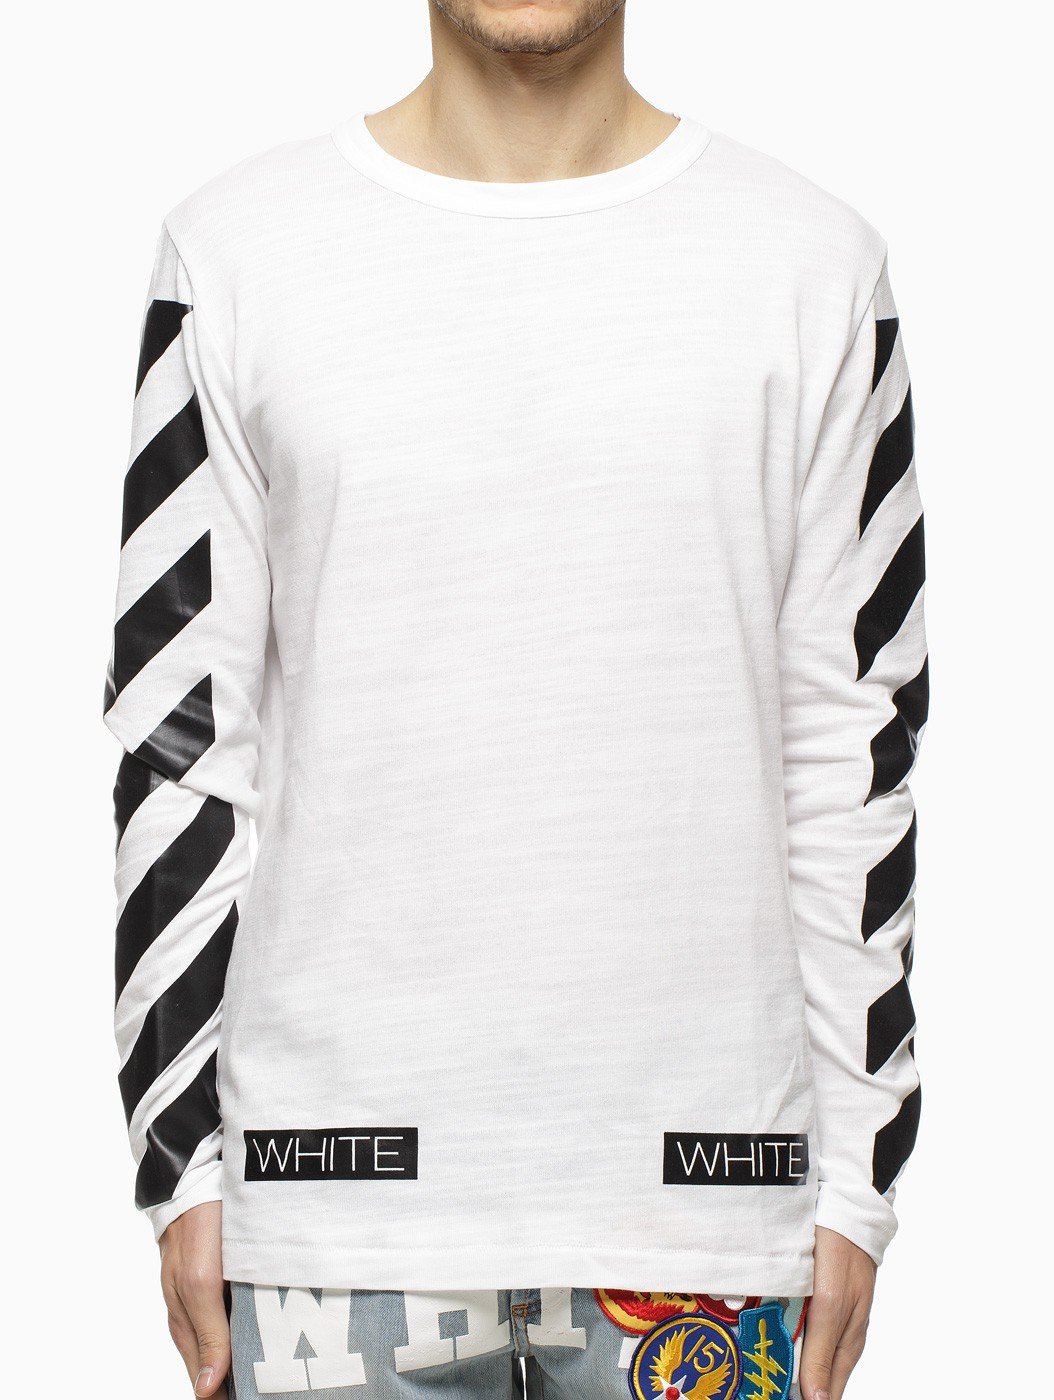 Lyst - Off-White C/O Virgil Abloh Striped Long Sleeve T-Shirt in White